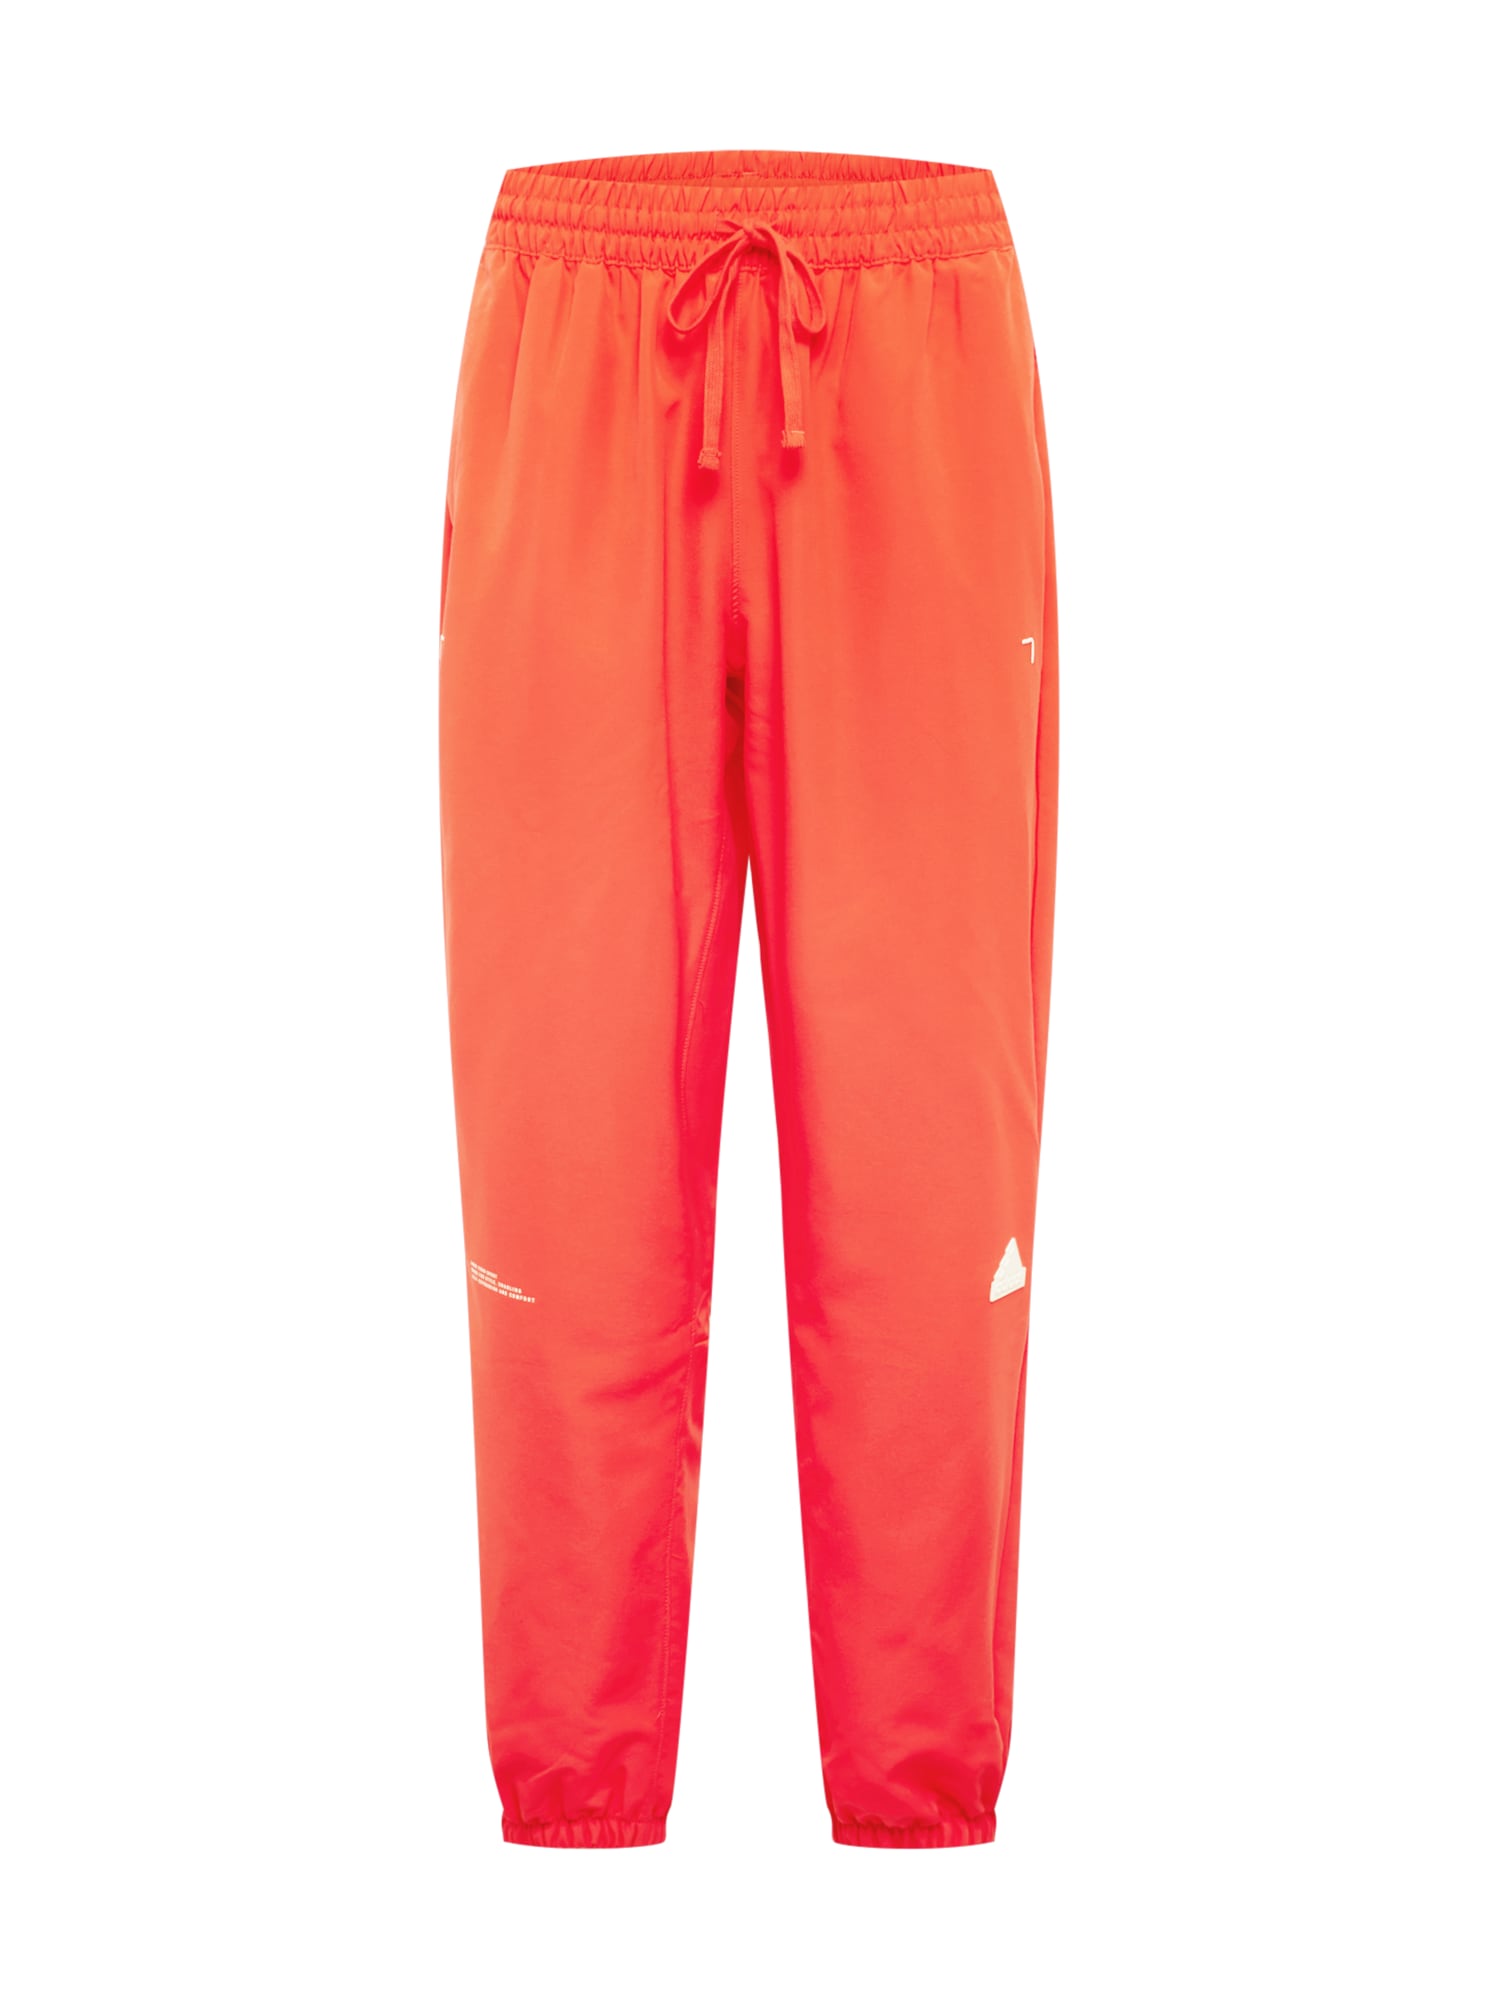 ADIDAS SPORTSWEAR Športne hlače  oranžno rdeča